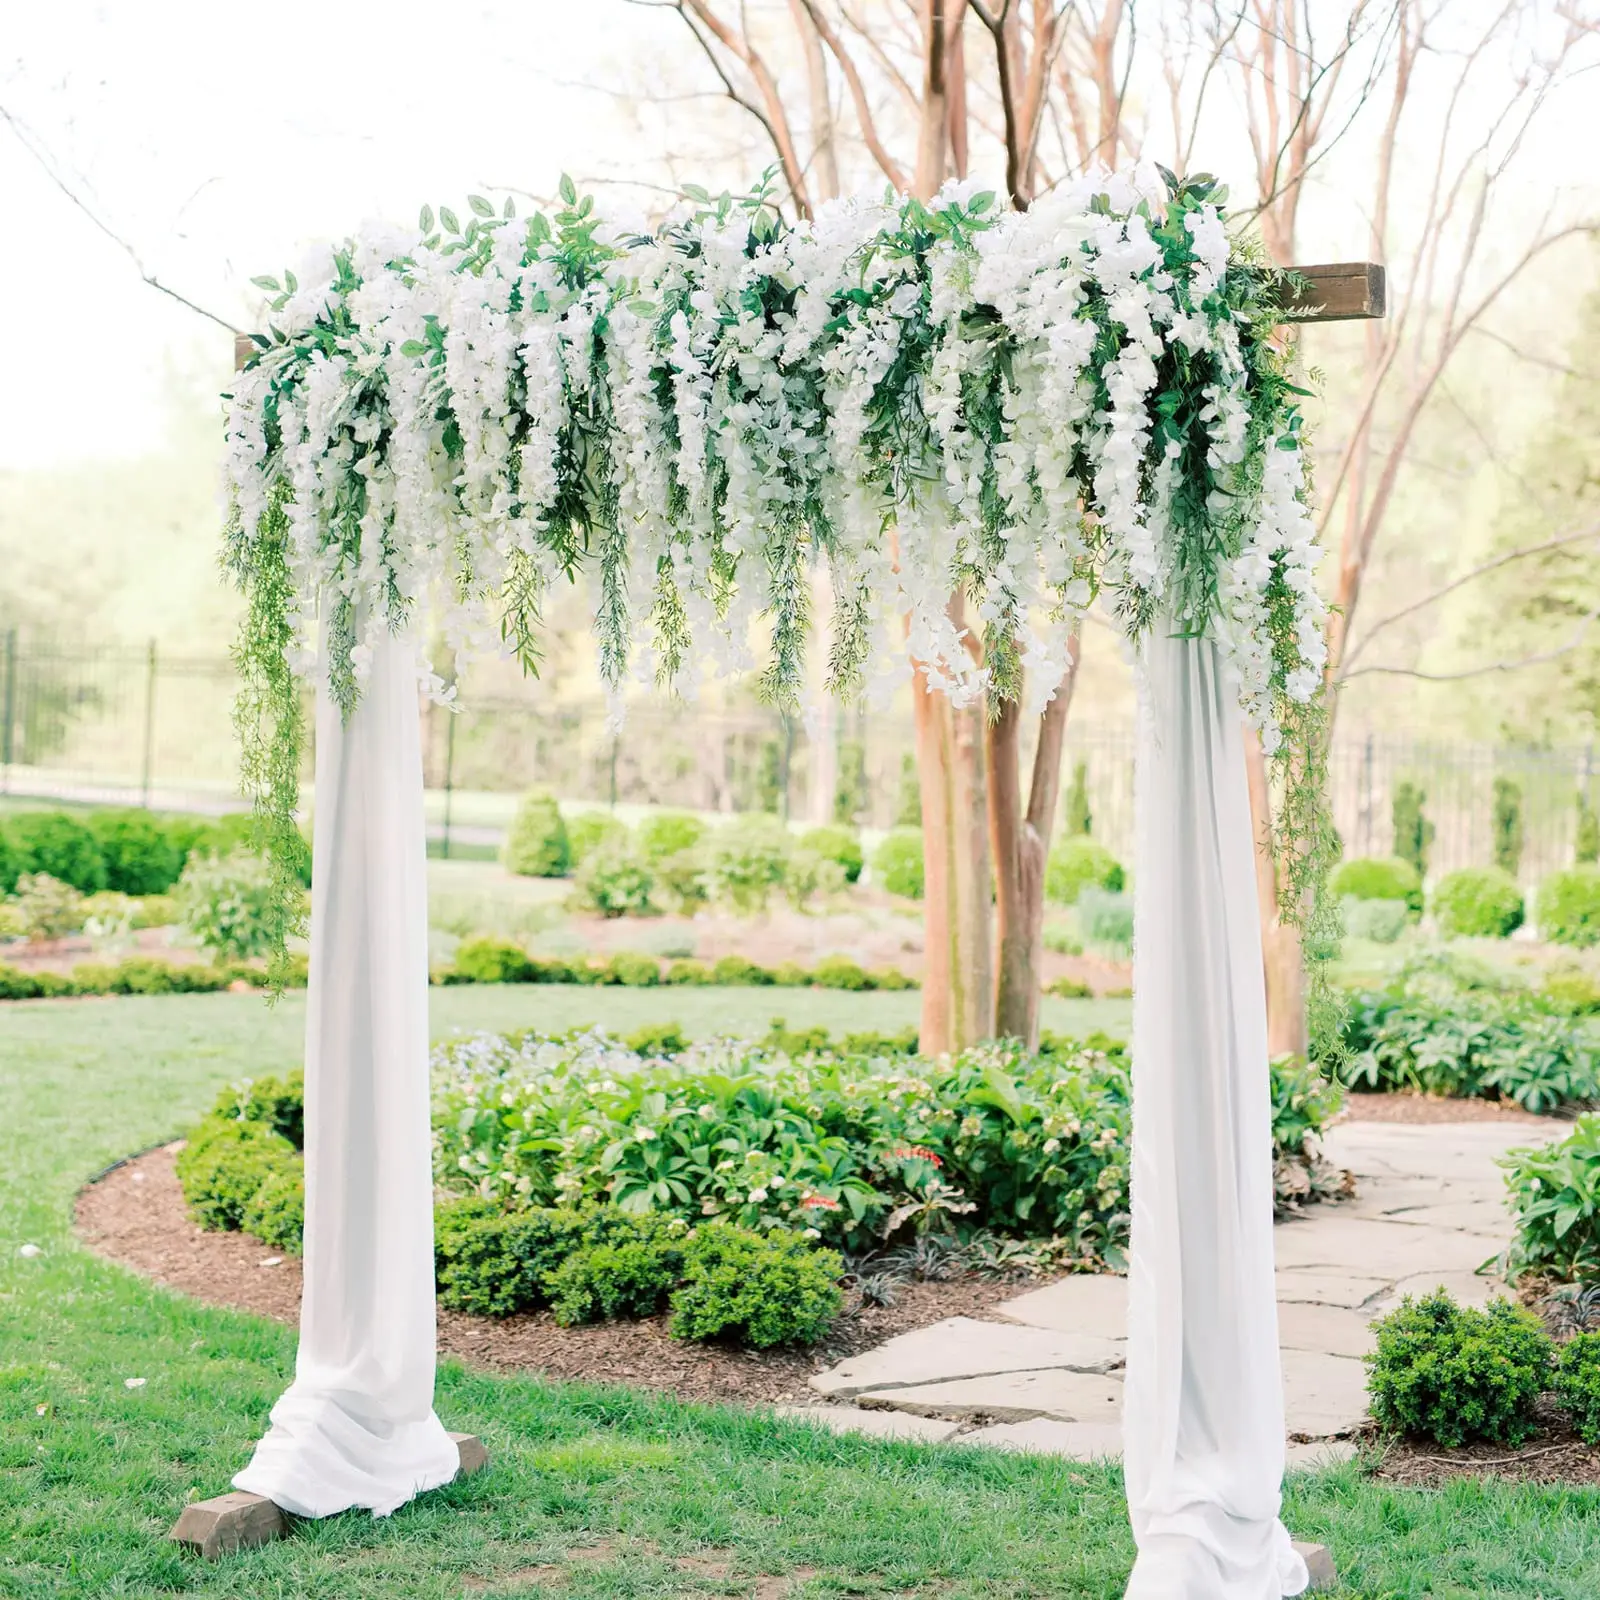 12pcs fiori di glicine artificiali String Hanging Garland Outdoor Wedding Garden Arch Decoration Home Party Decor fiore finto